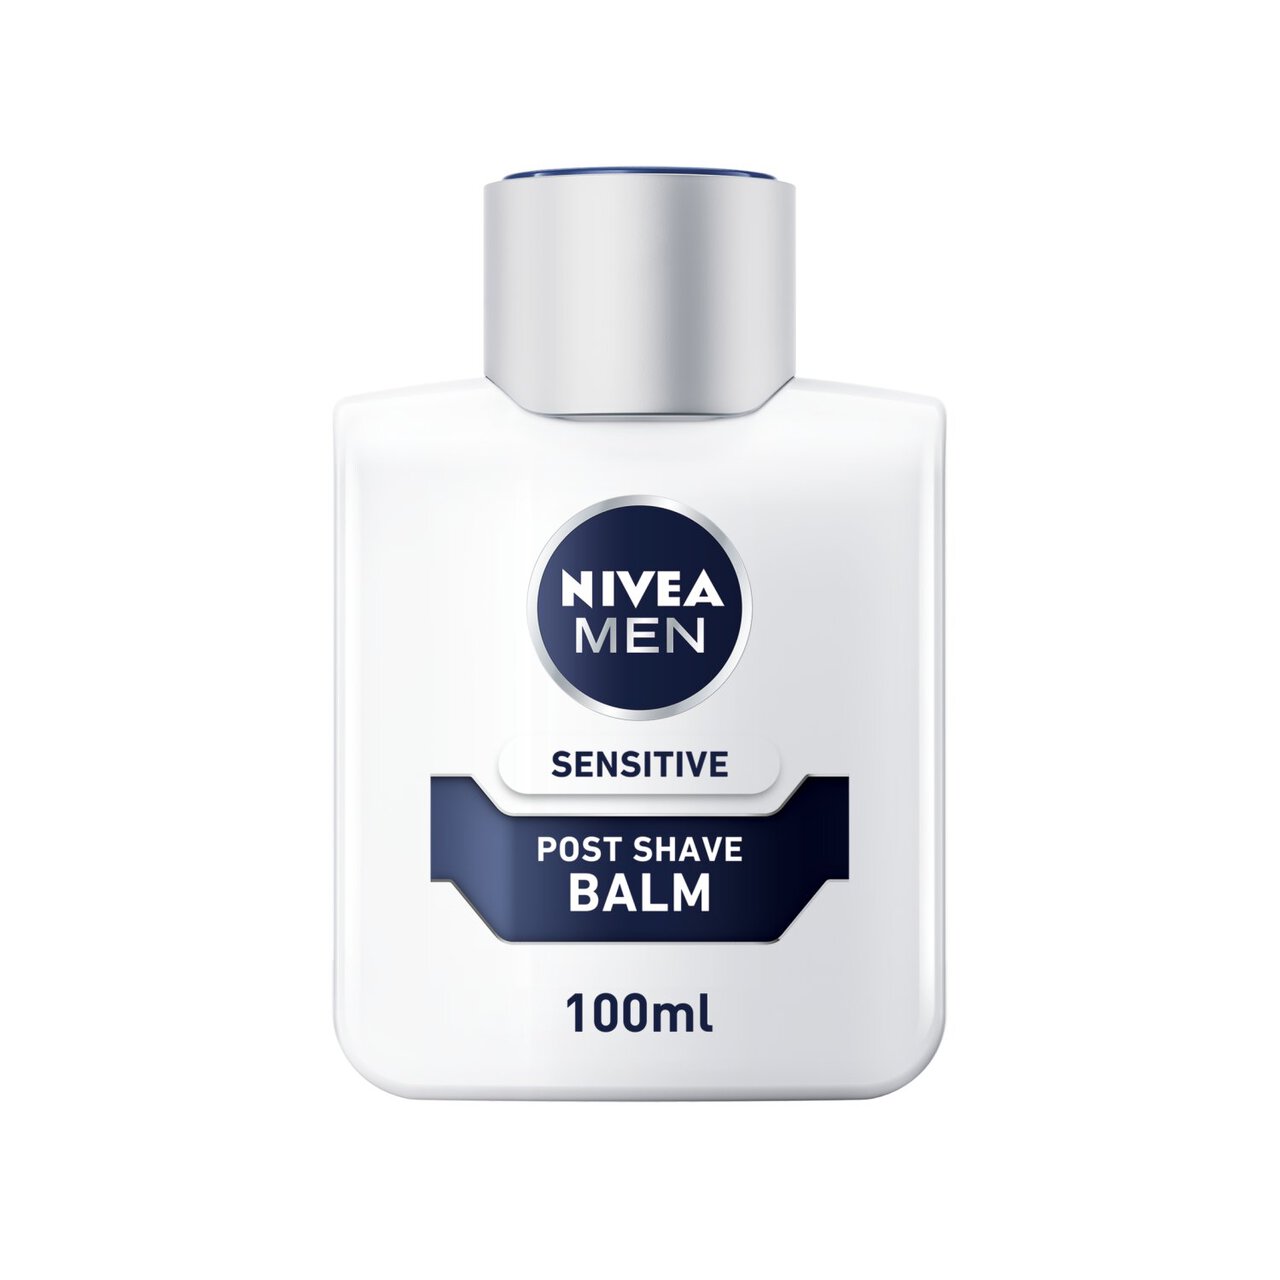 NIVEA MEN Sensitive Post Shave Balm with 0% Alcohol 100ml